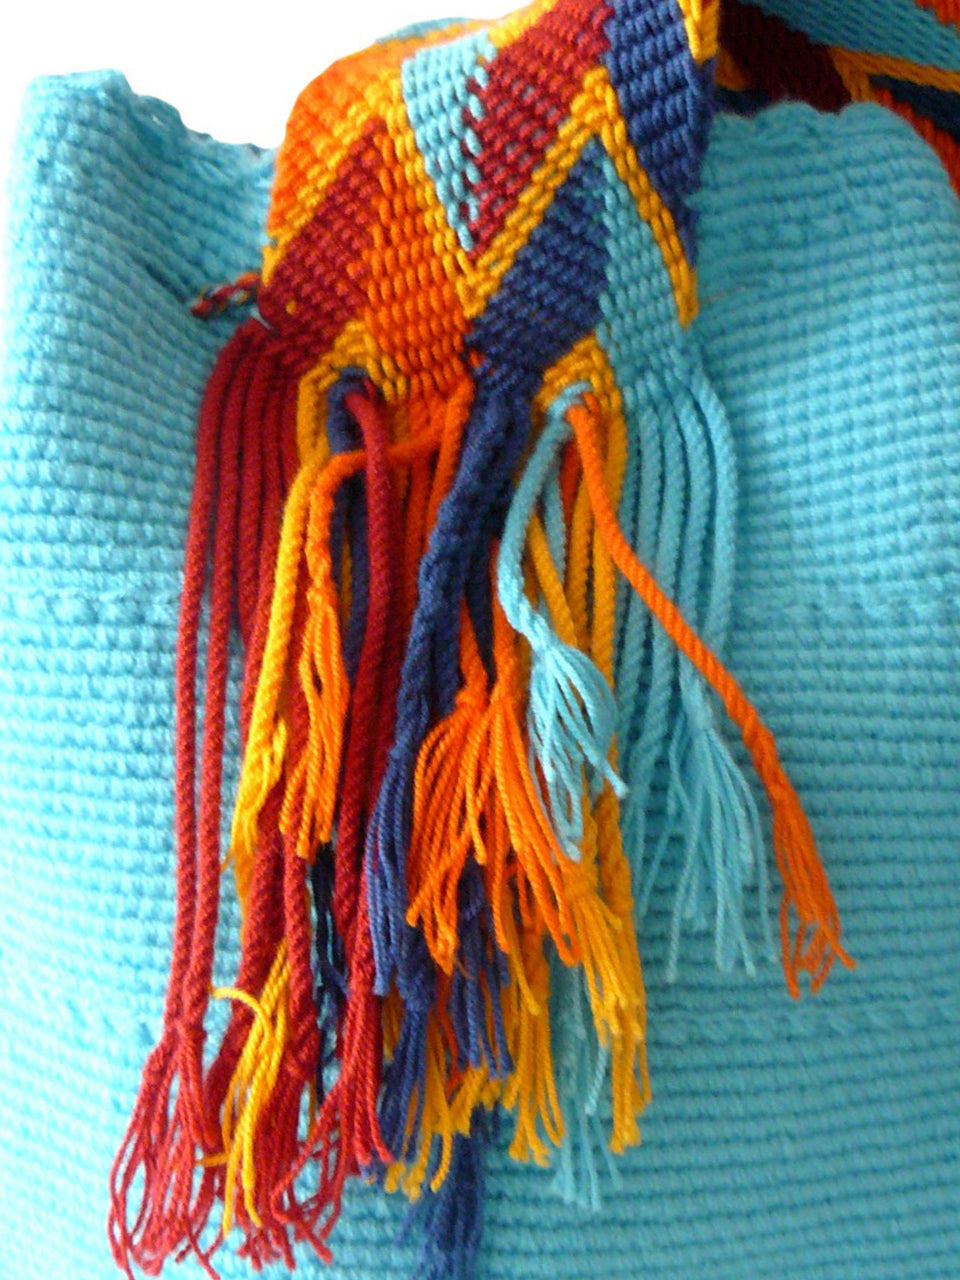 Turquoise woven shoulder bag with blue, orange, and yellow tassels Palmazul Beachwear Wayuu Mochila